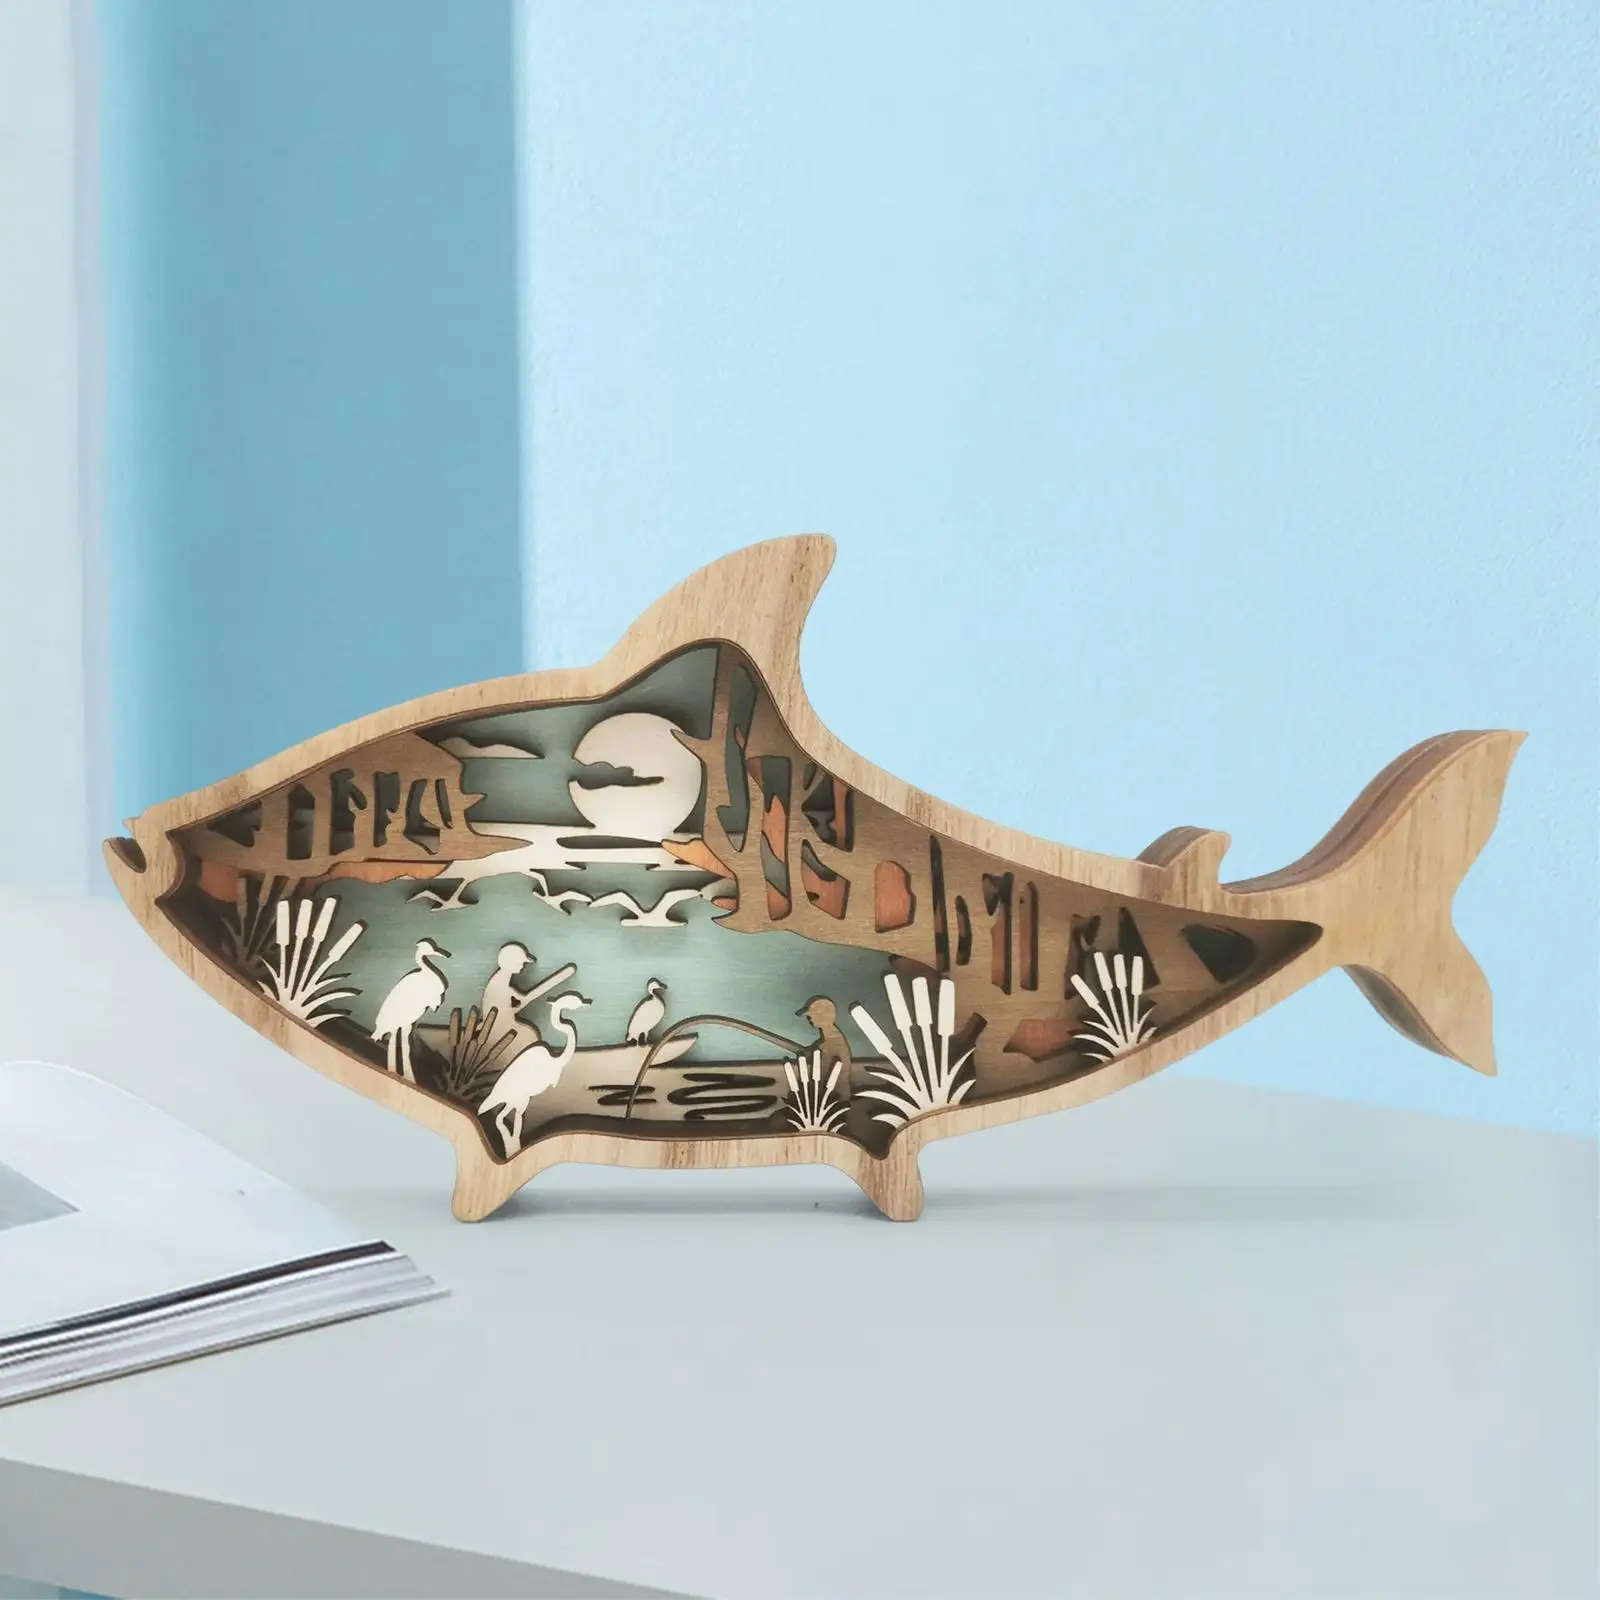 Creative Wooden Sea Creatures Decorative Statues Carved Fish DIY Marine Theme